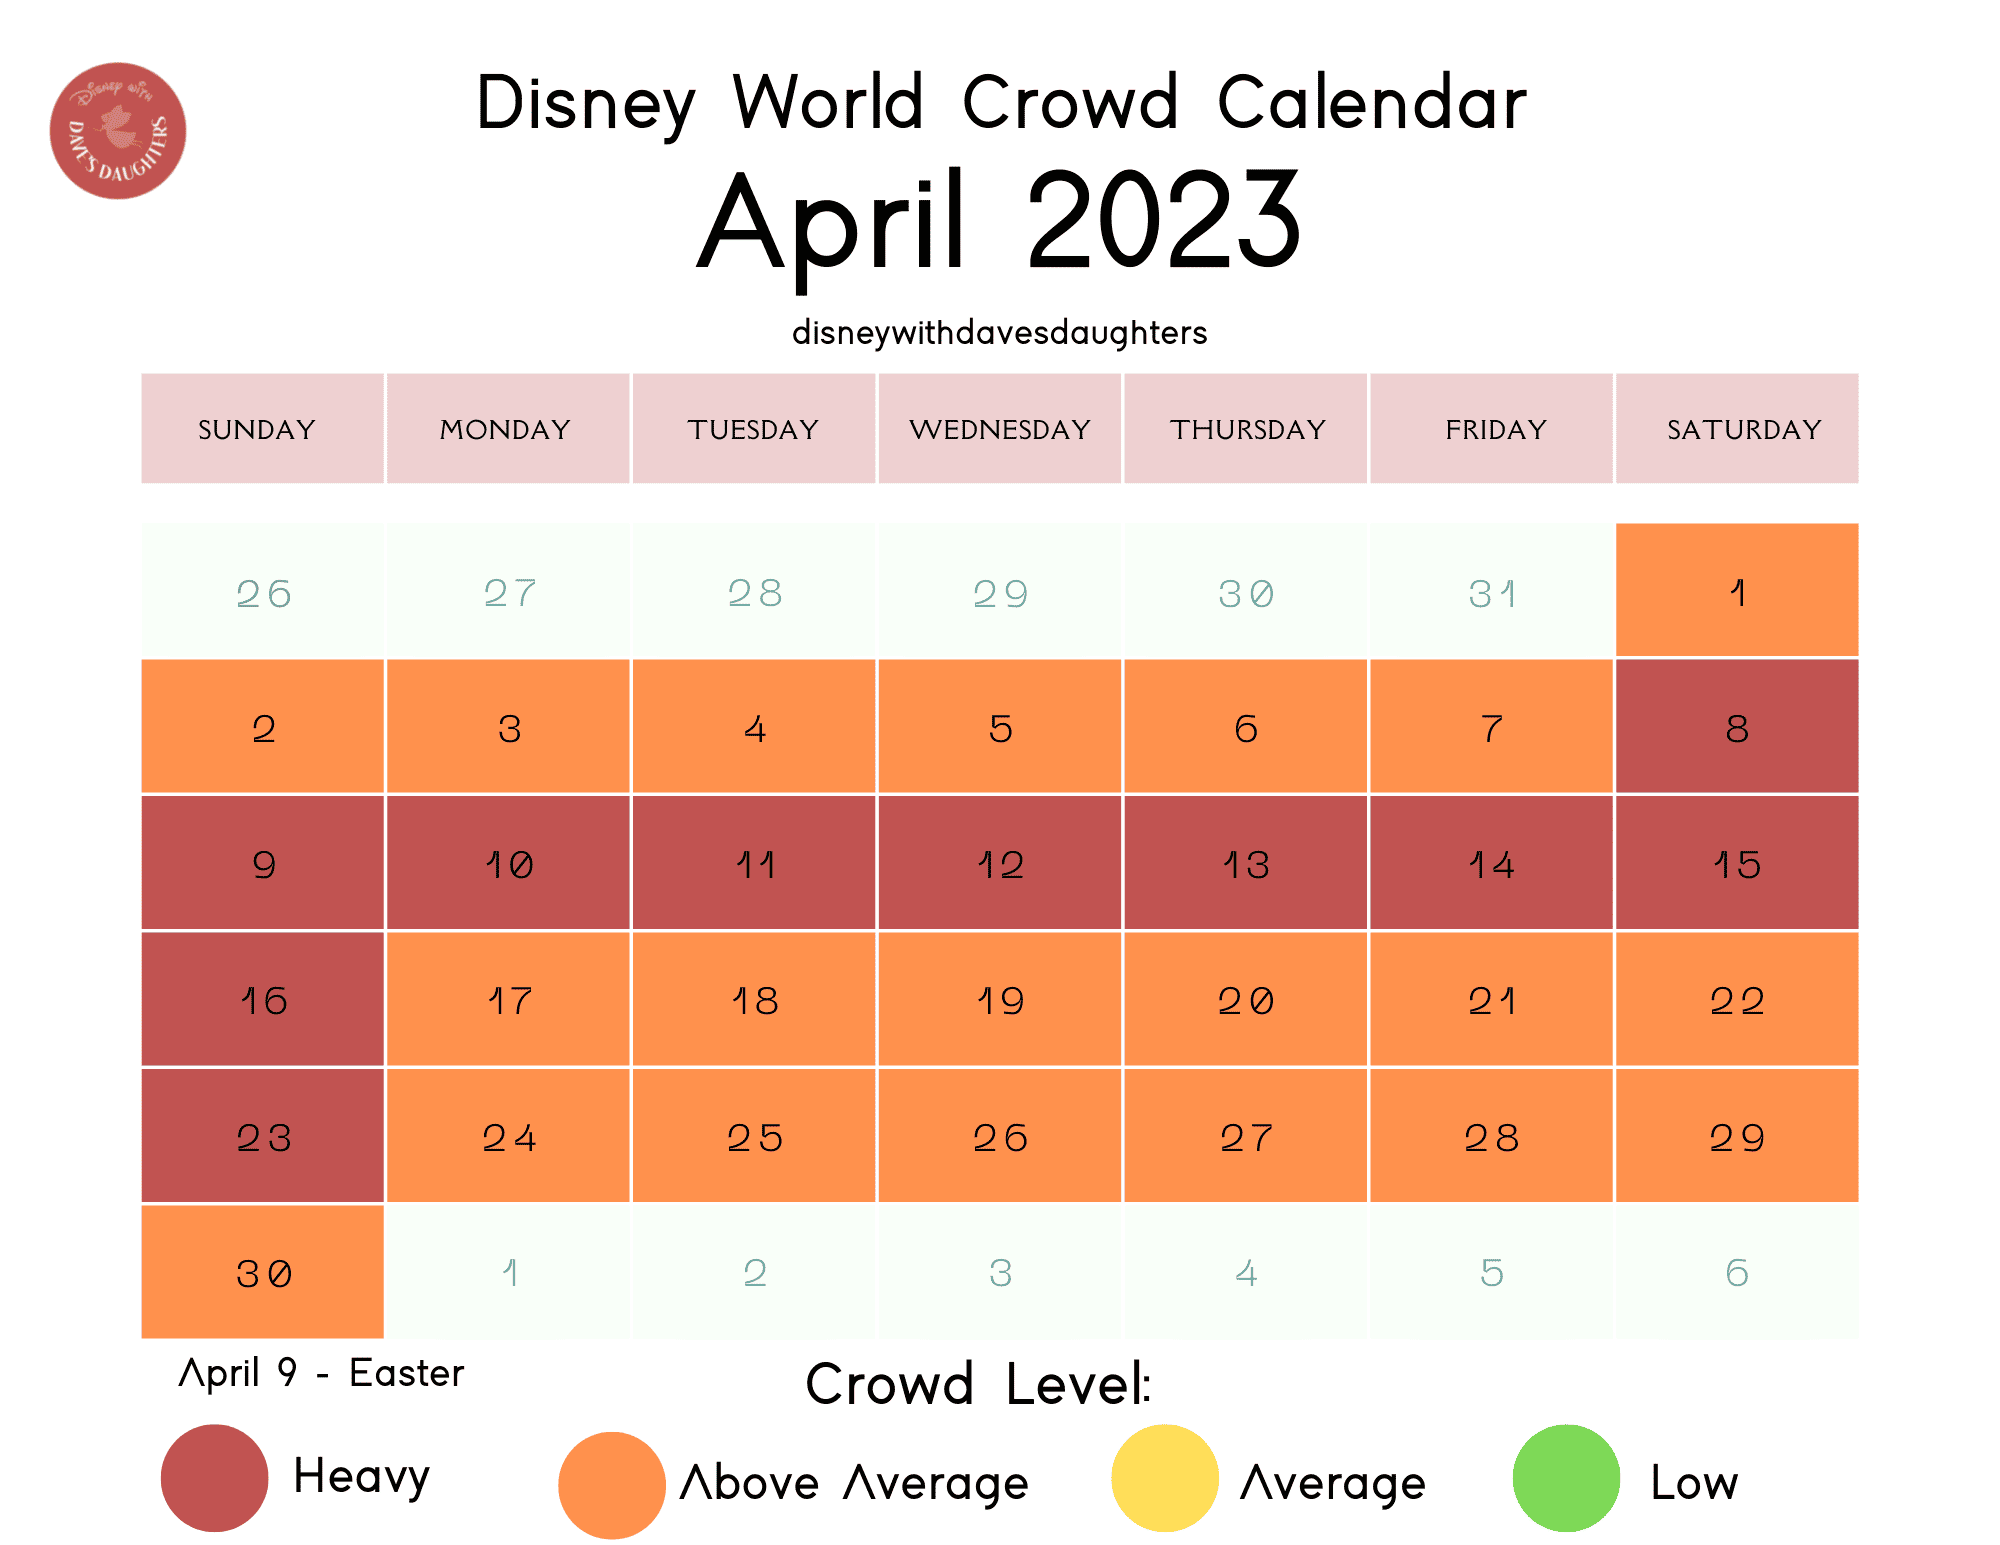 April 2023 Disney World Crowd Calendar